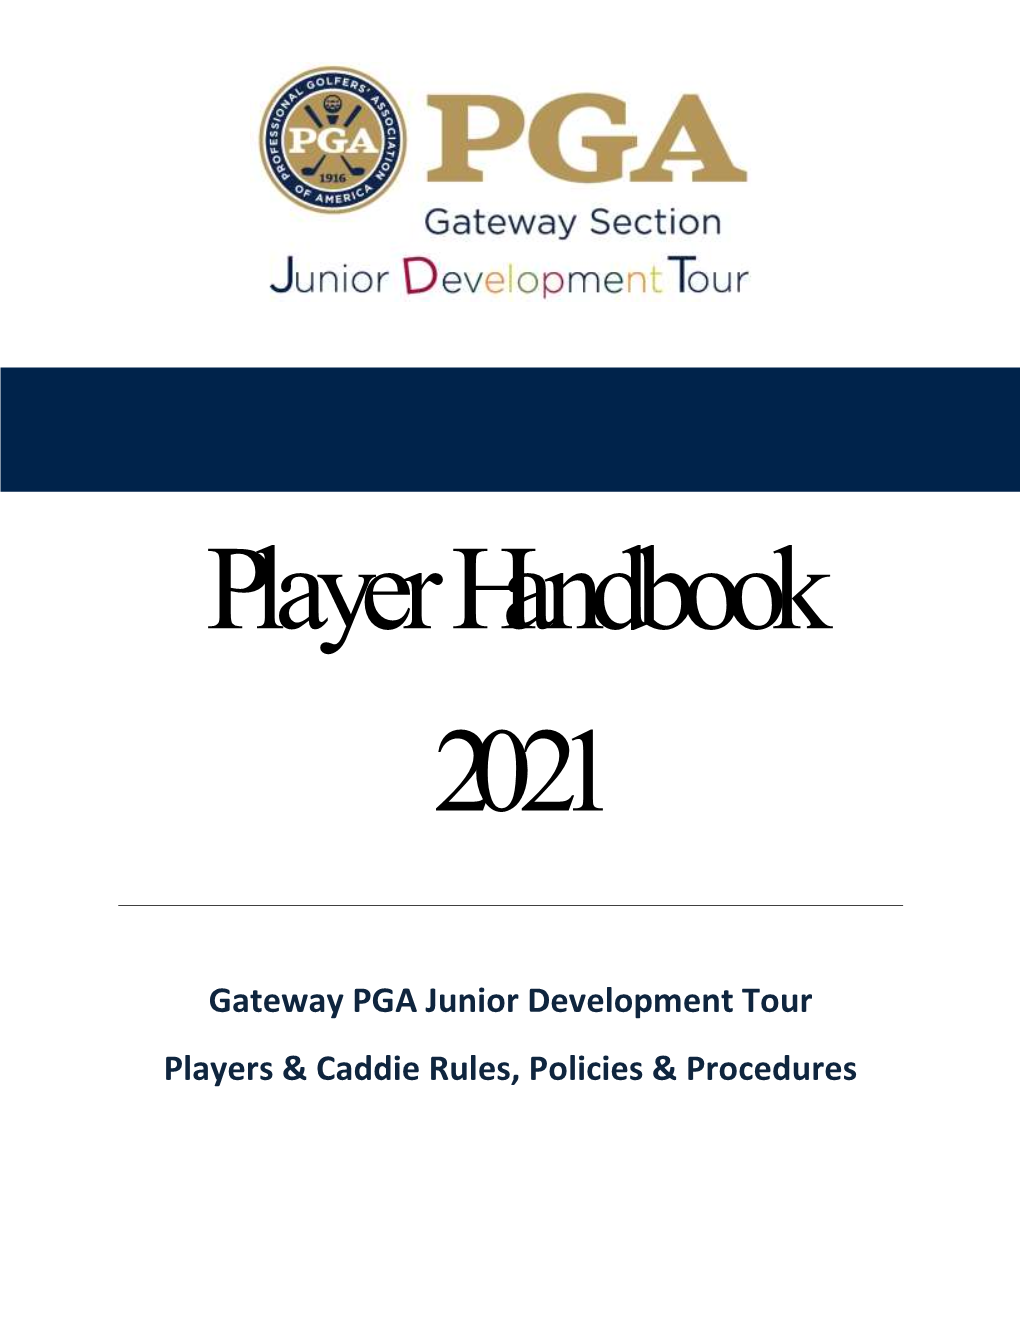 Gateway PGA Junior Development Tour Players & Caddie Rules